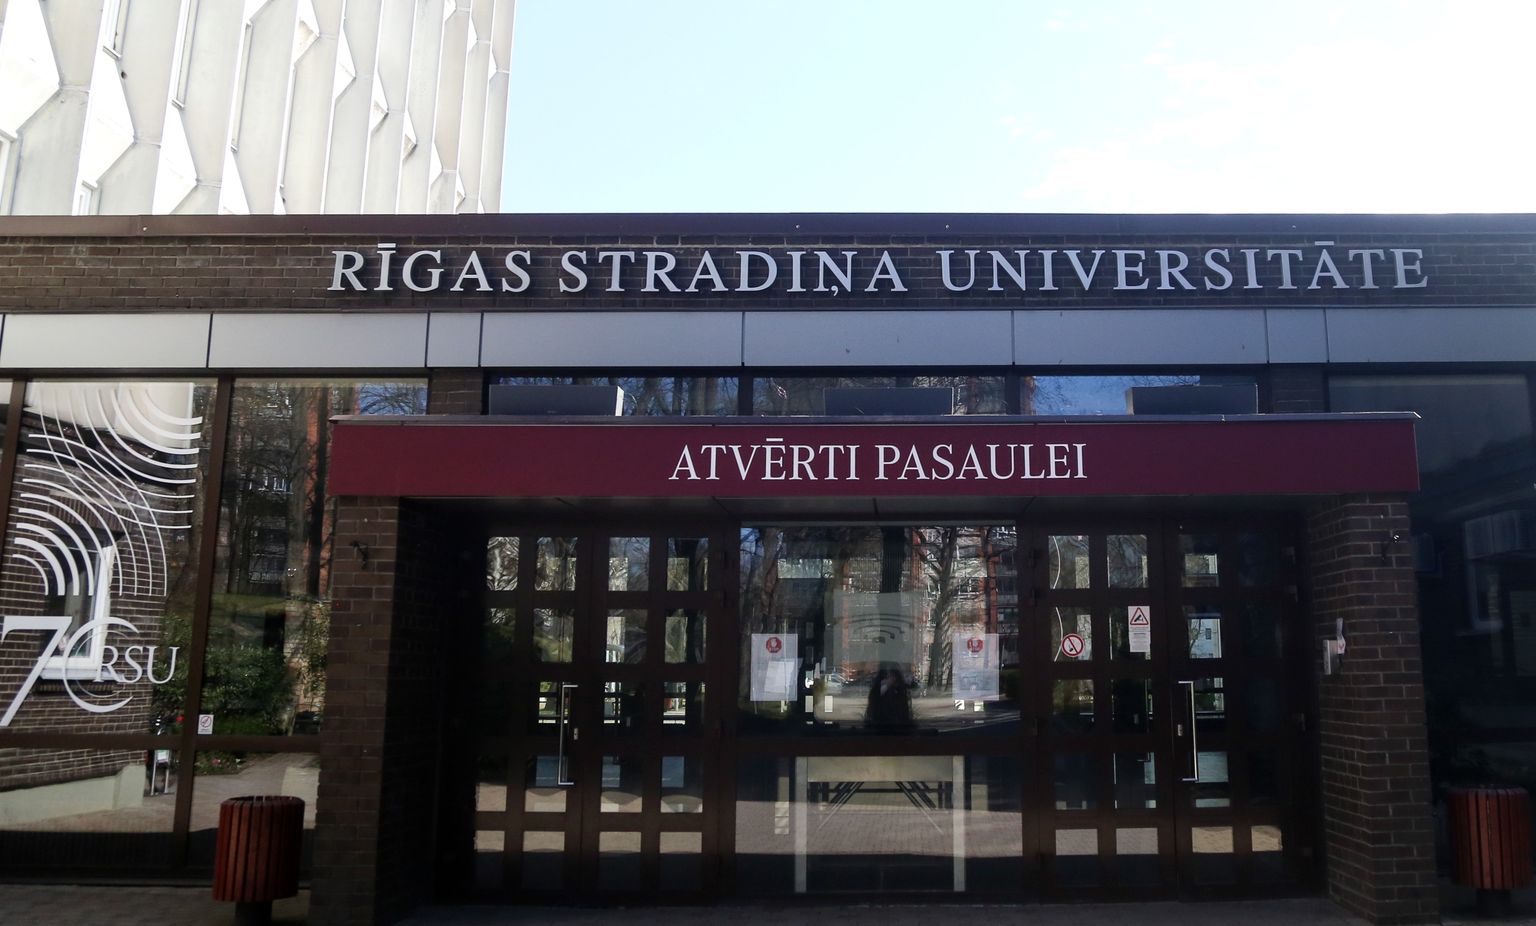 Riga Stradins University building.